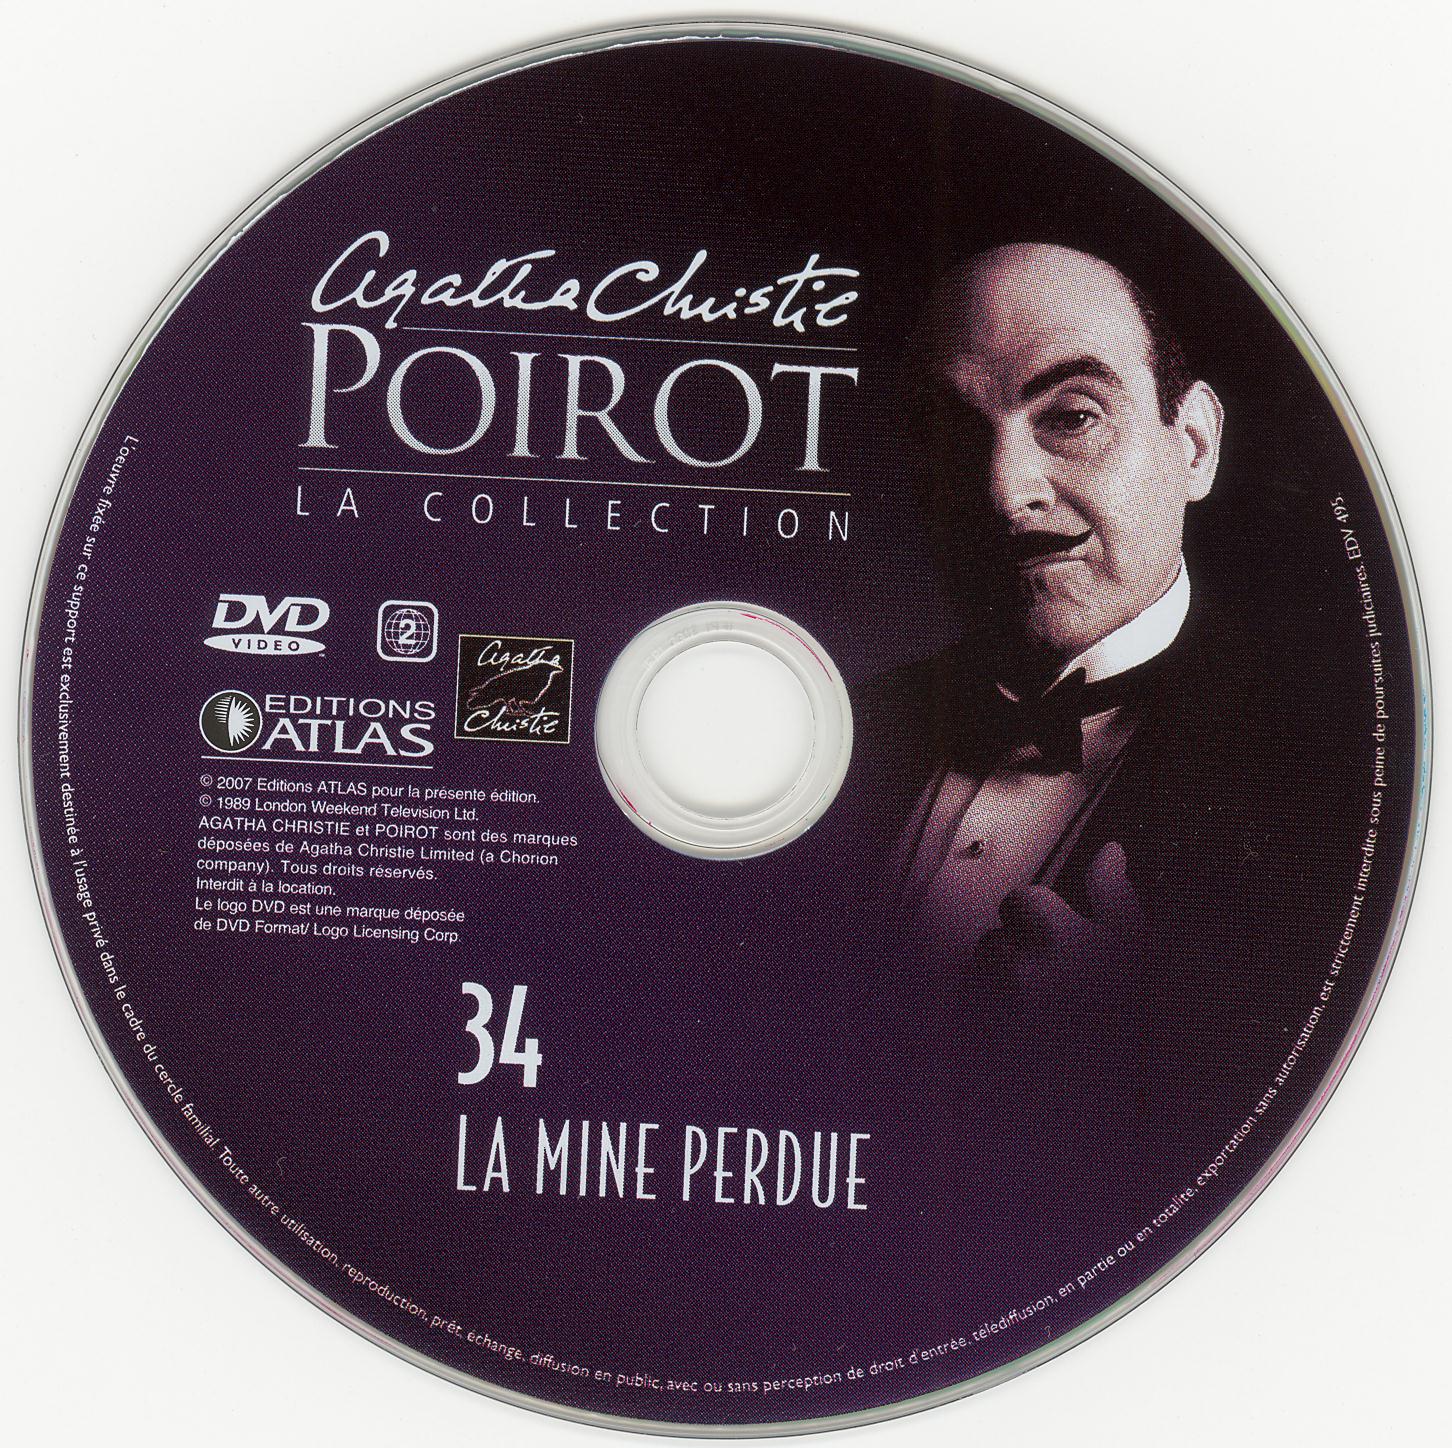 Hercule Poirot vol 34